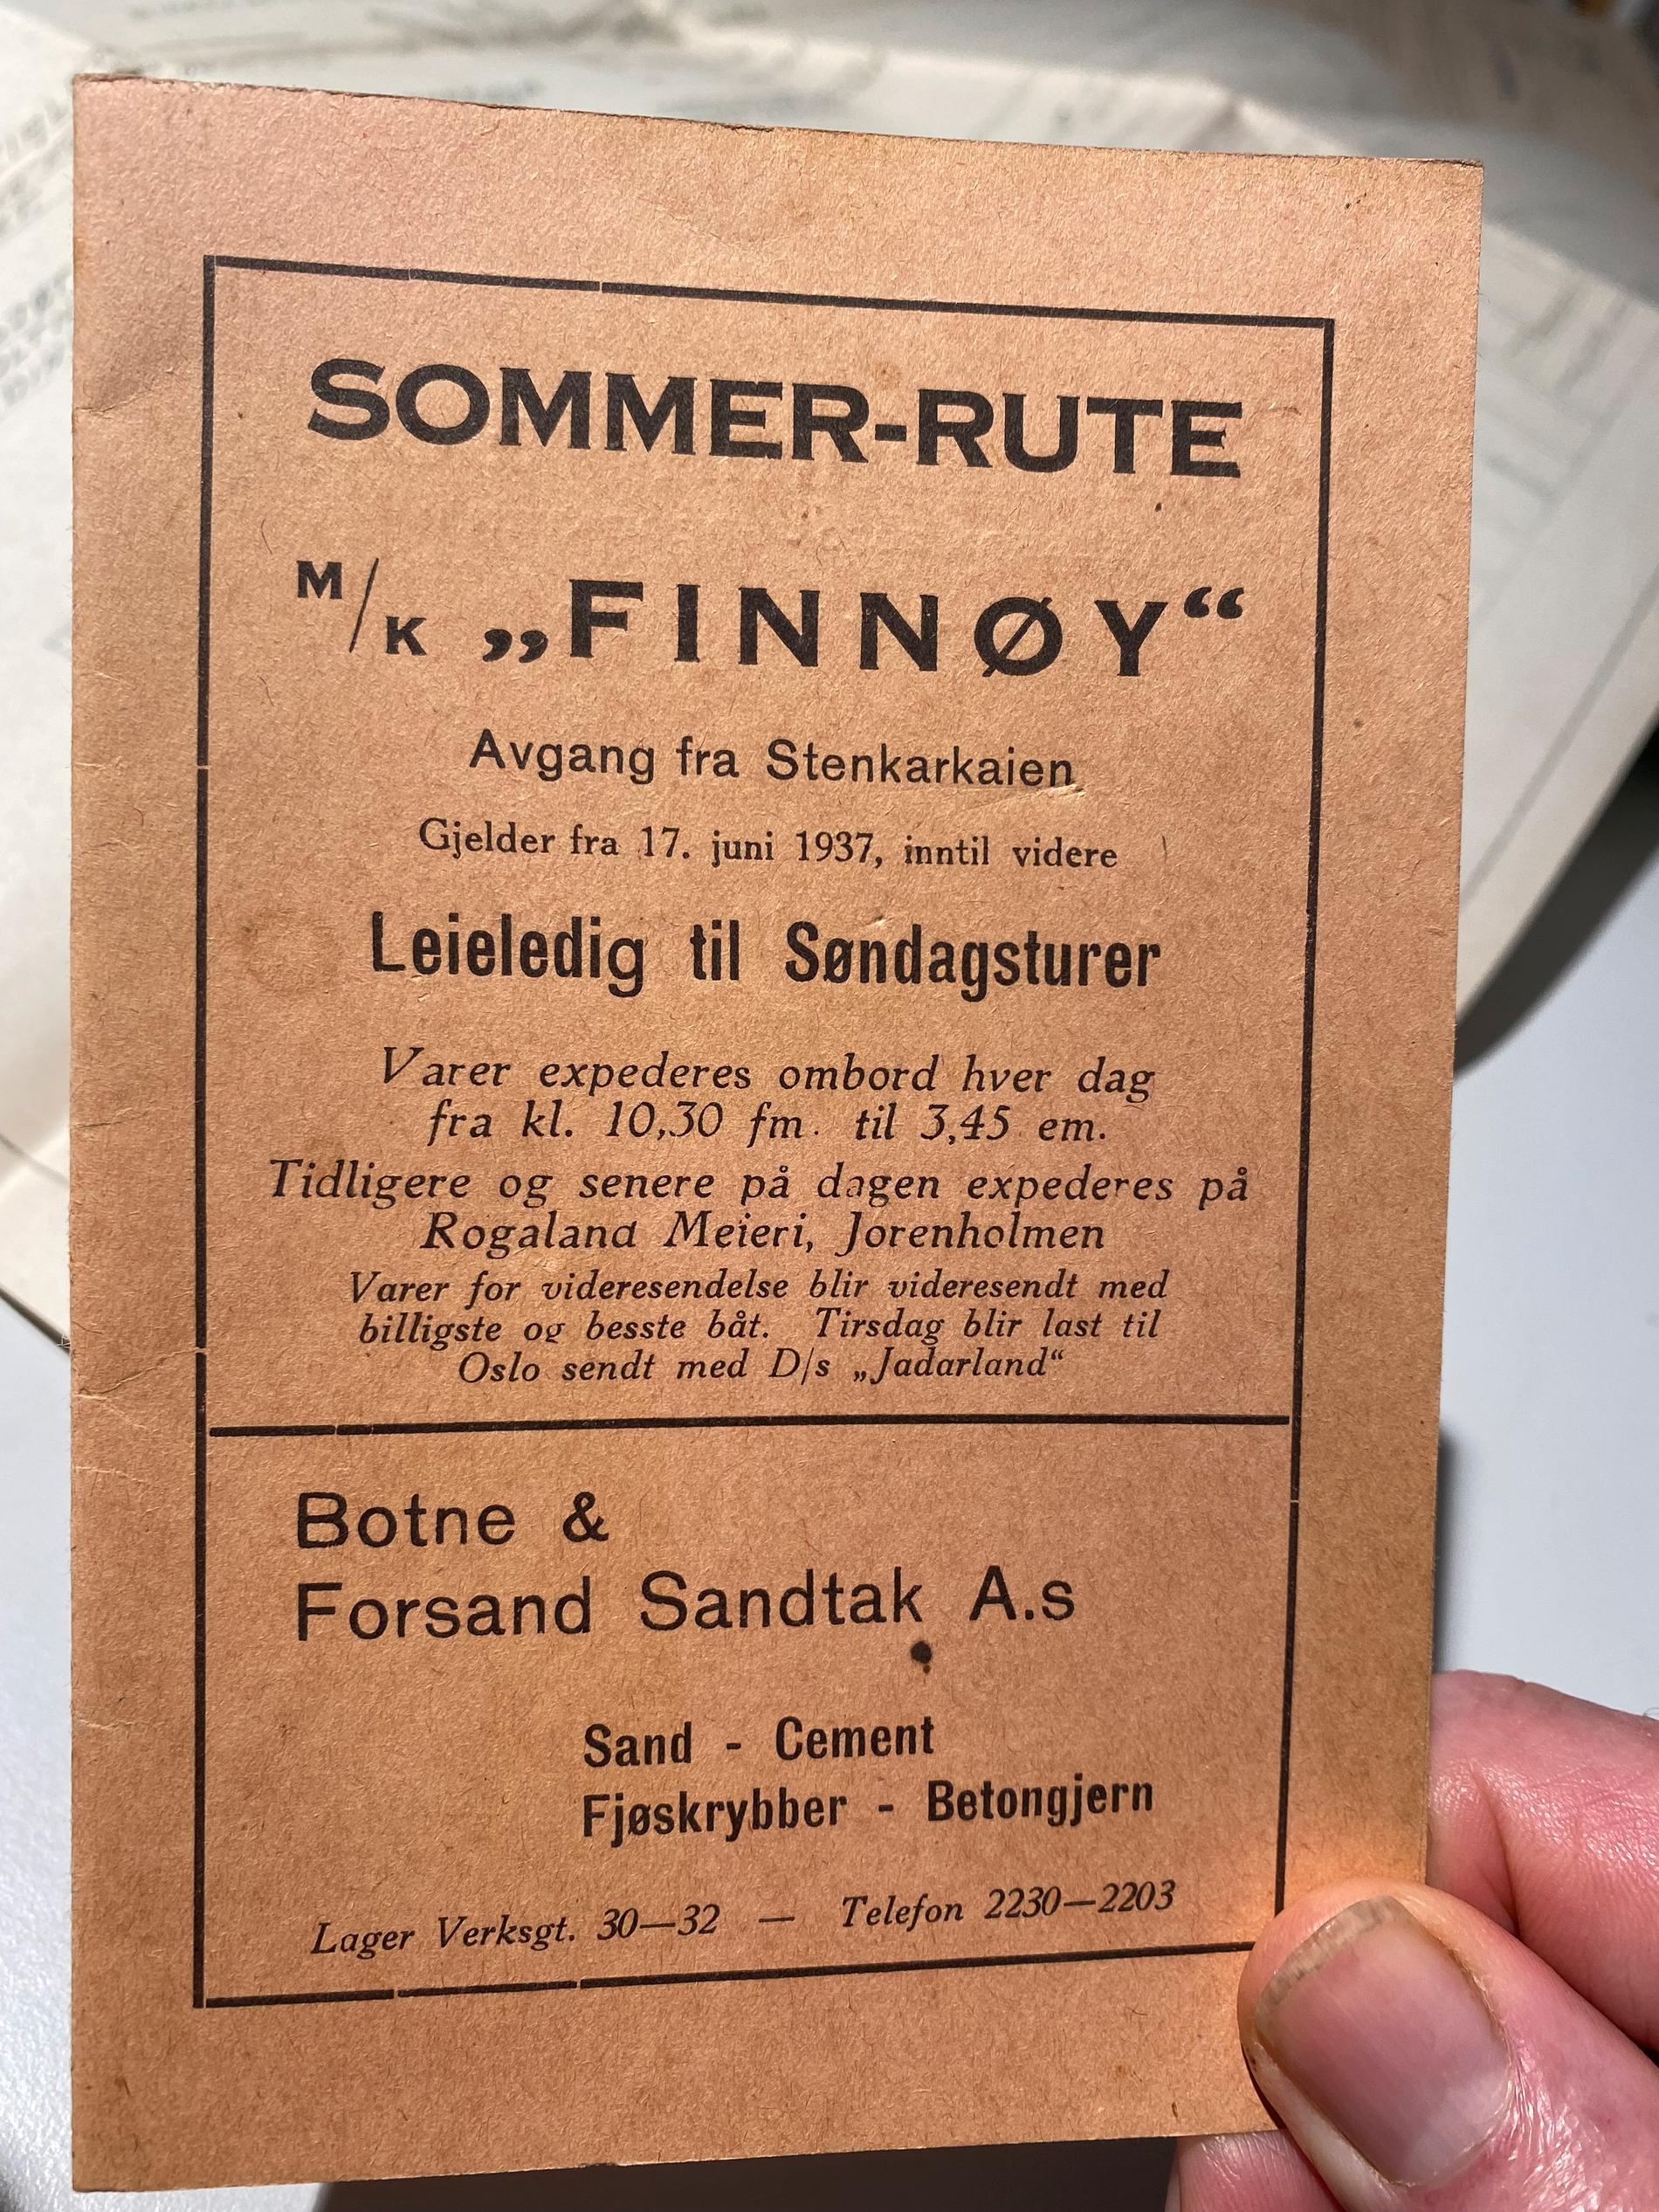 Ruteheftet til M/K Finnøy.